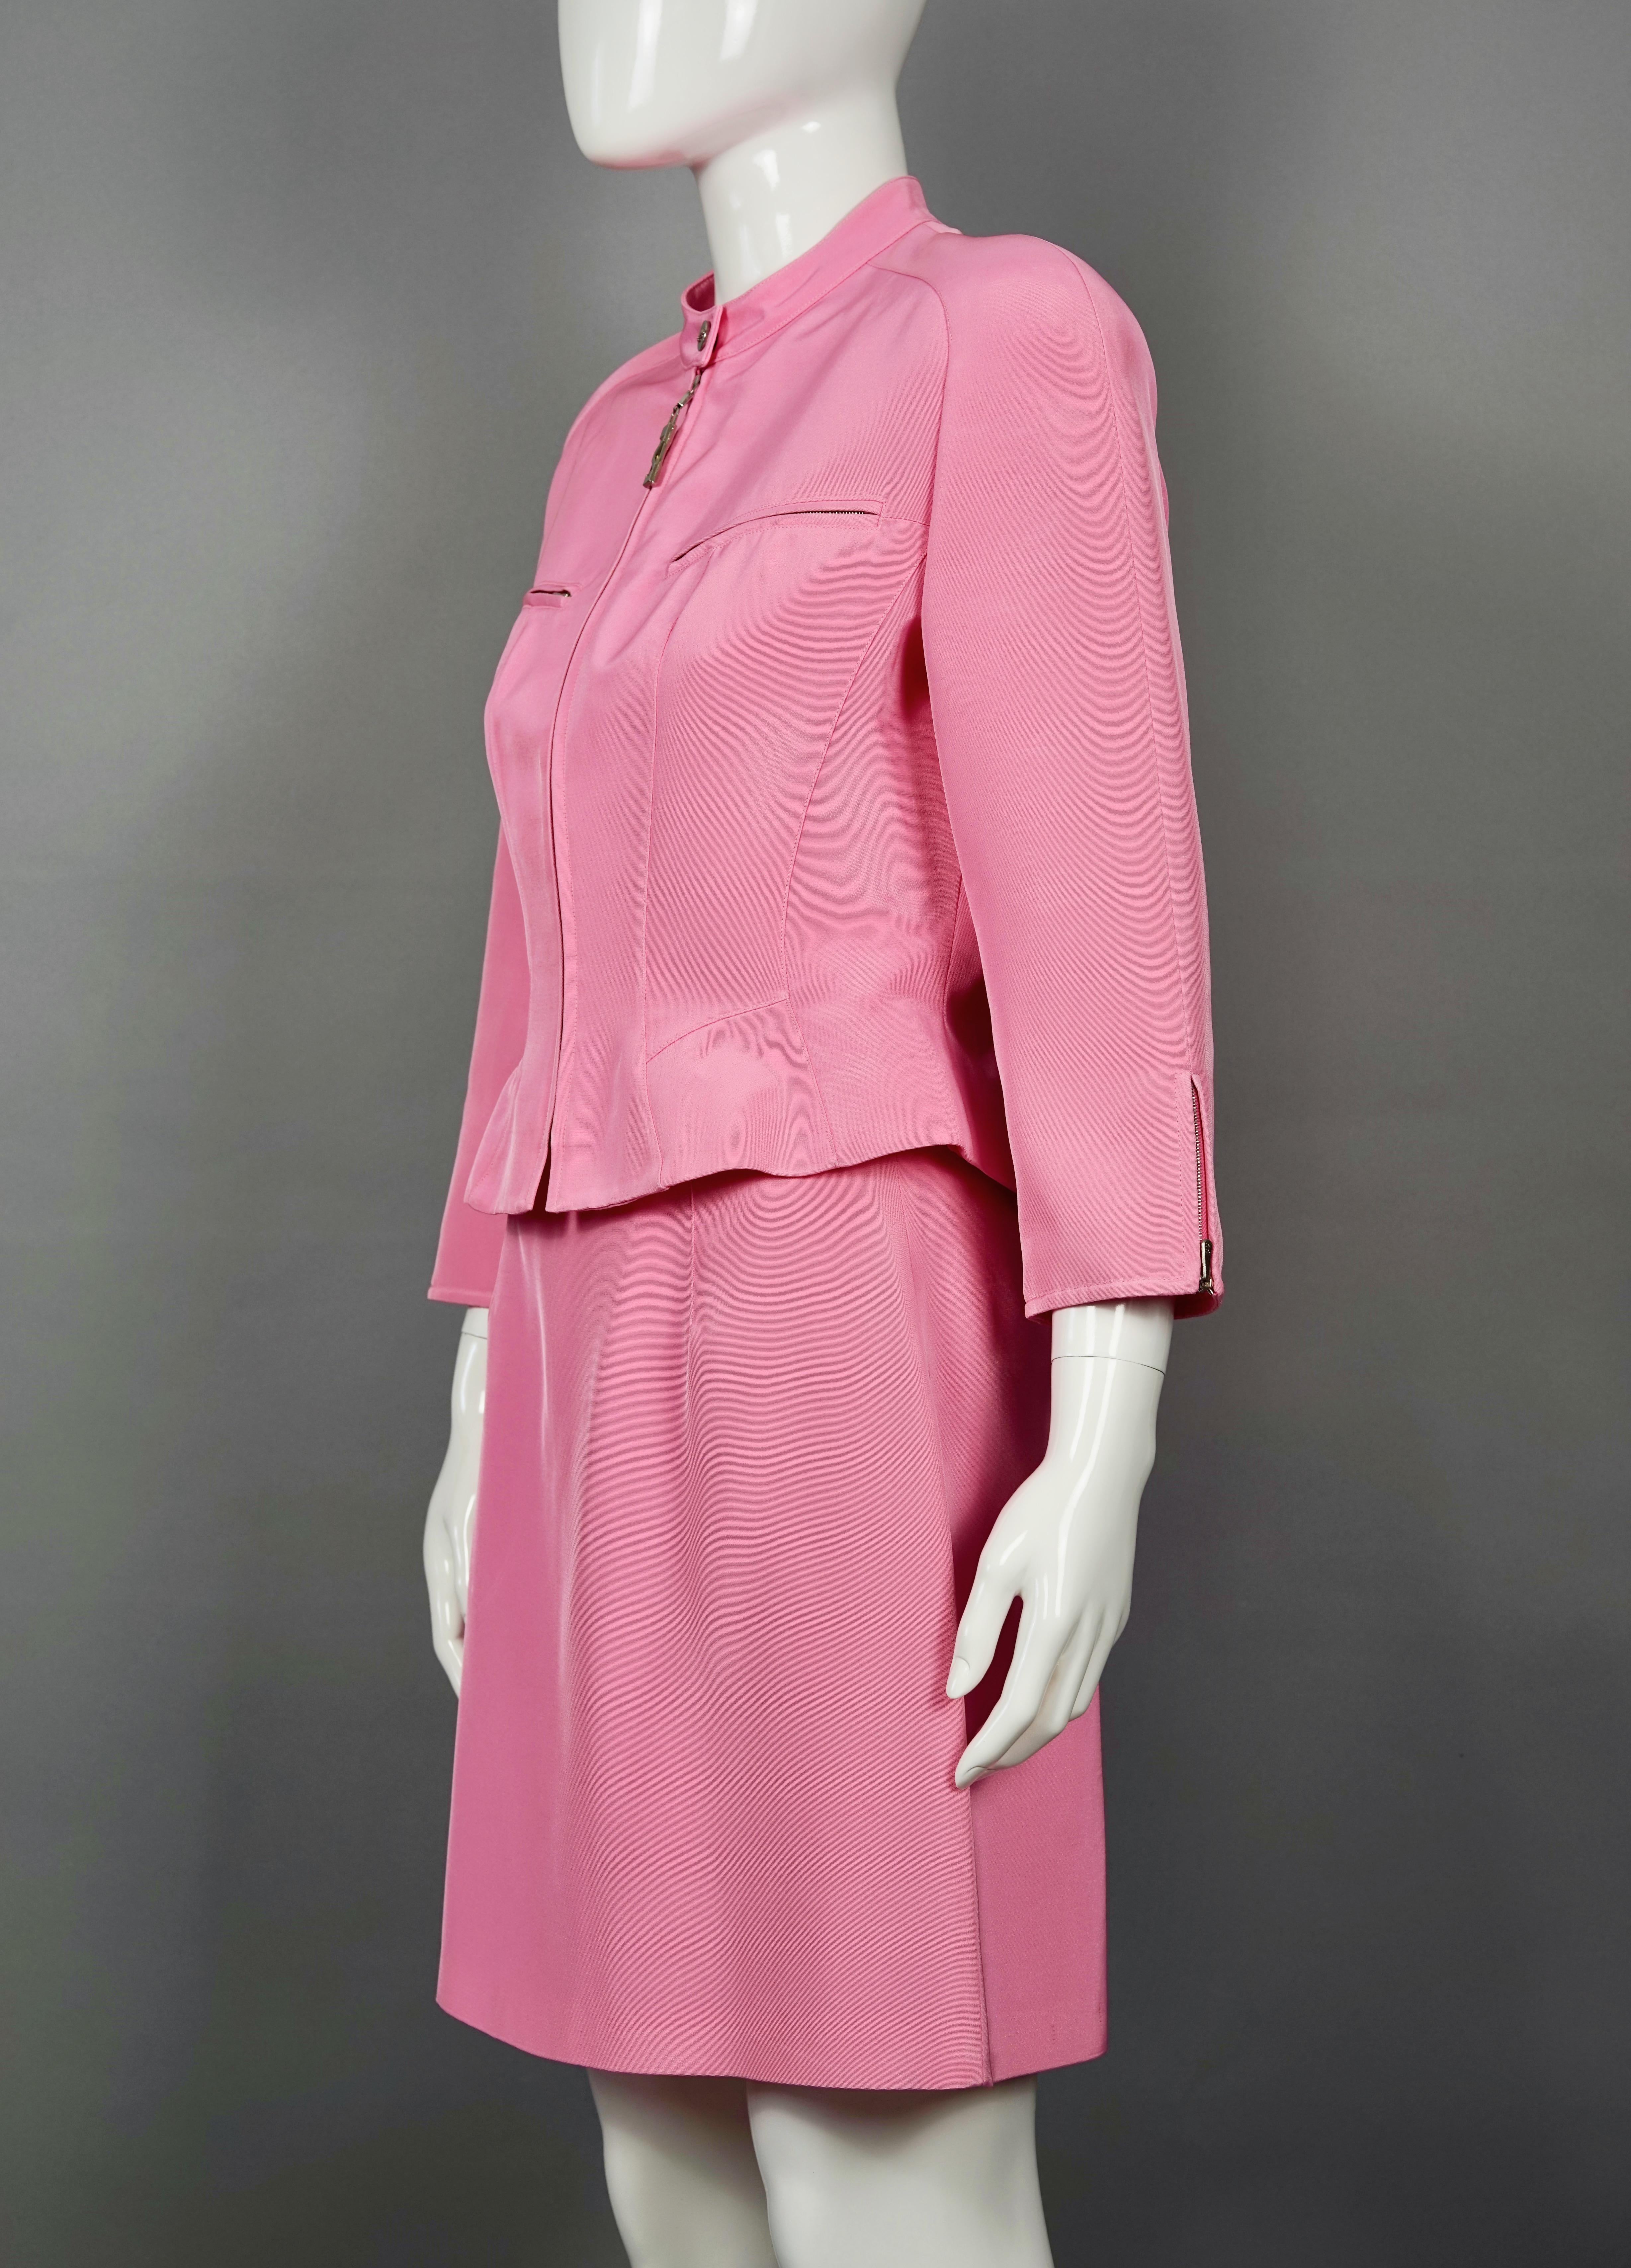 Vintage MUGLER Candy Pink Jacket Skirt Suit

Measurements taken laid flat, please double bust, waist and hips :
JACKET/ BLAZER
Shoulder: 18.50inches (47 cm)
Sleeves: 17.32 inches (44 cm)
Bust: 18.89 inches (48 cm)
Waist: 14.96 inches (38 cm)
Length: